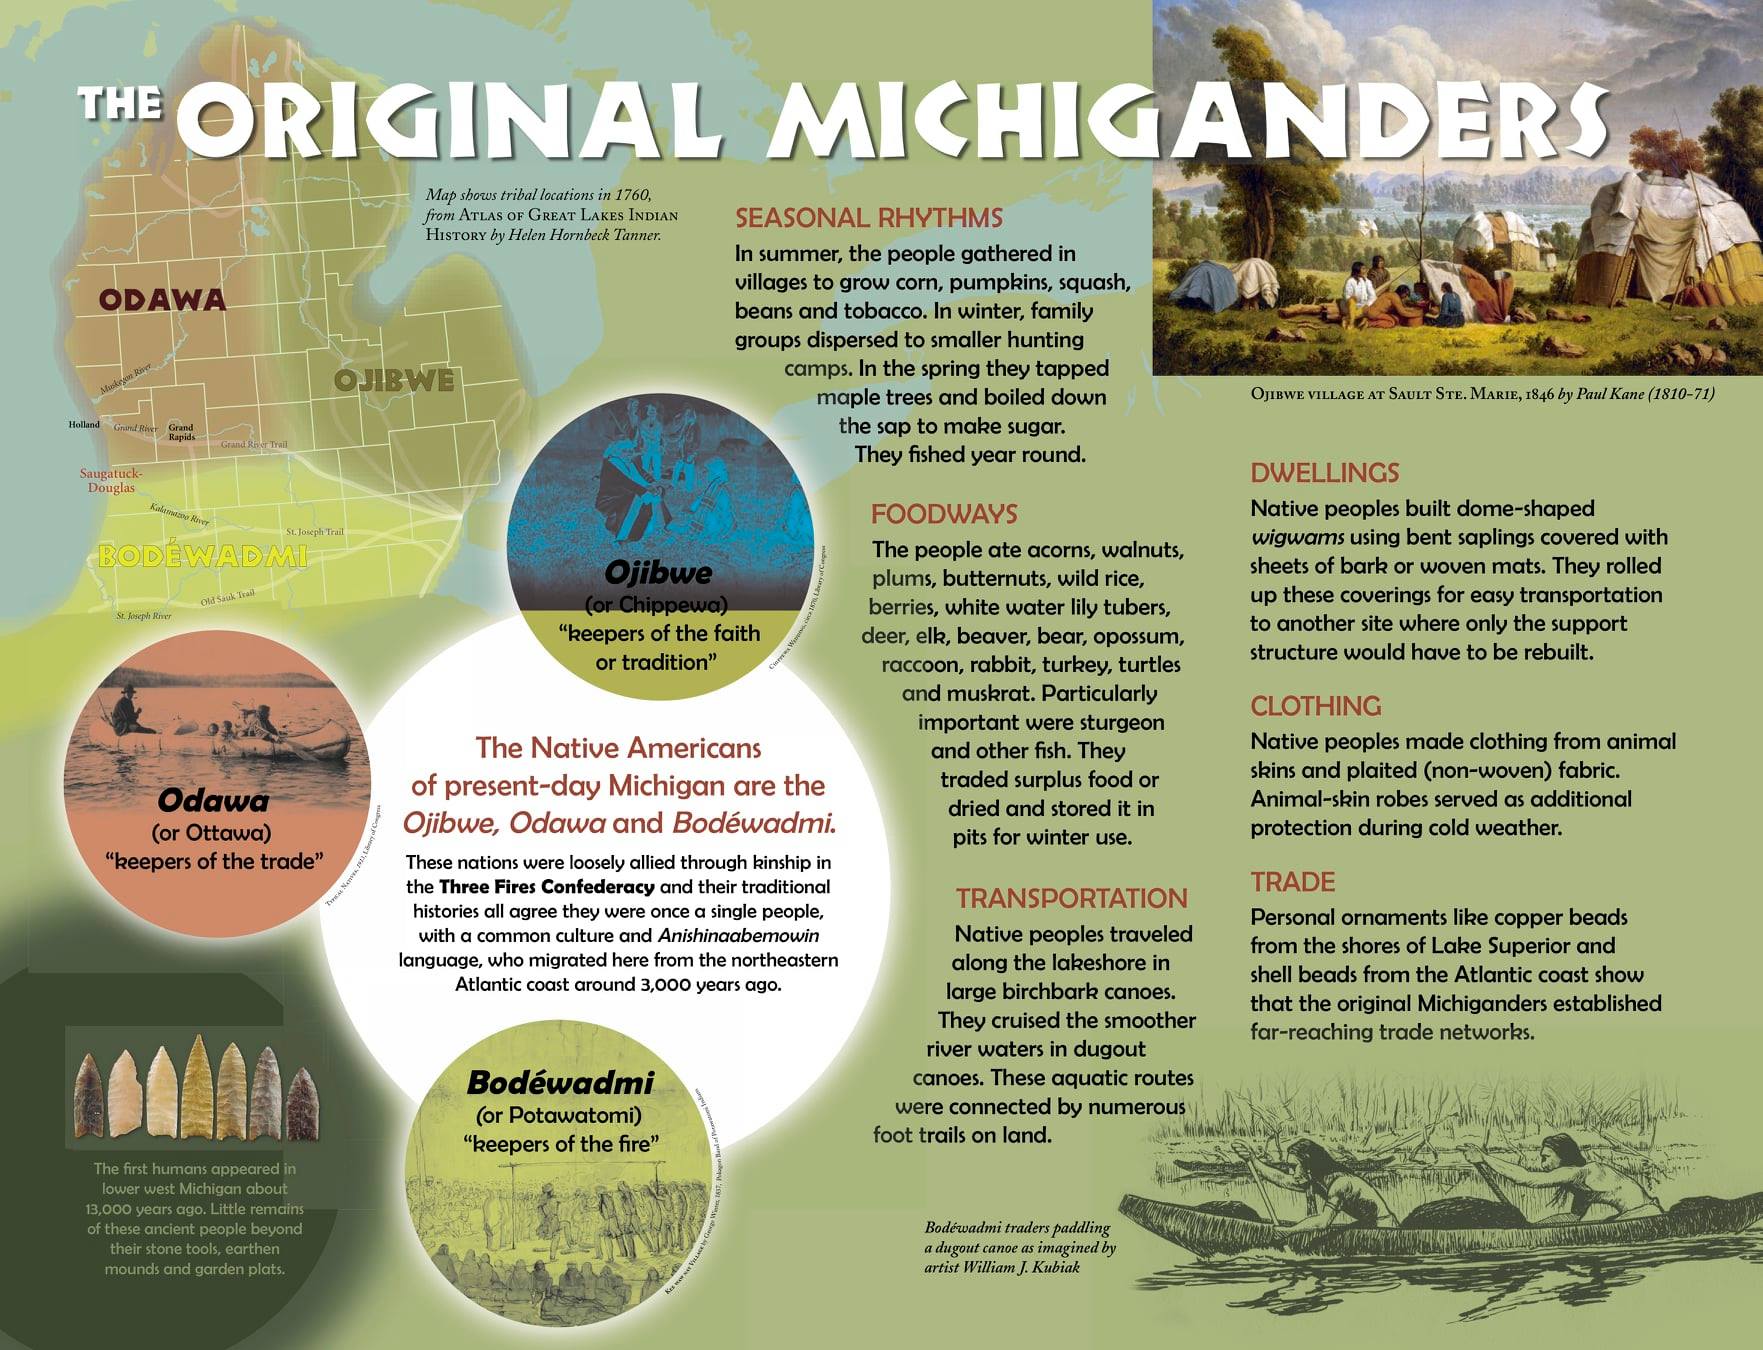 Interpretive panel about indigenous people, "The Original Michiganders"